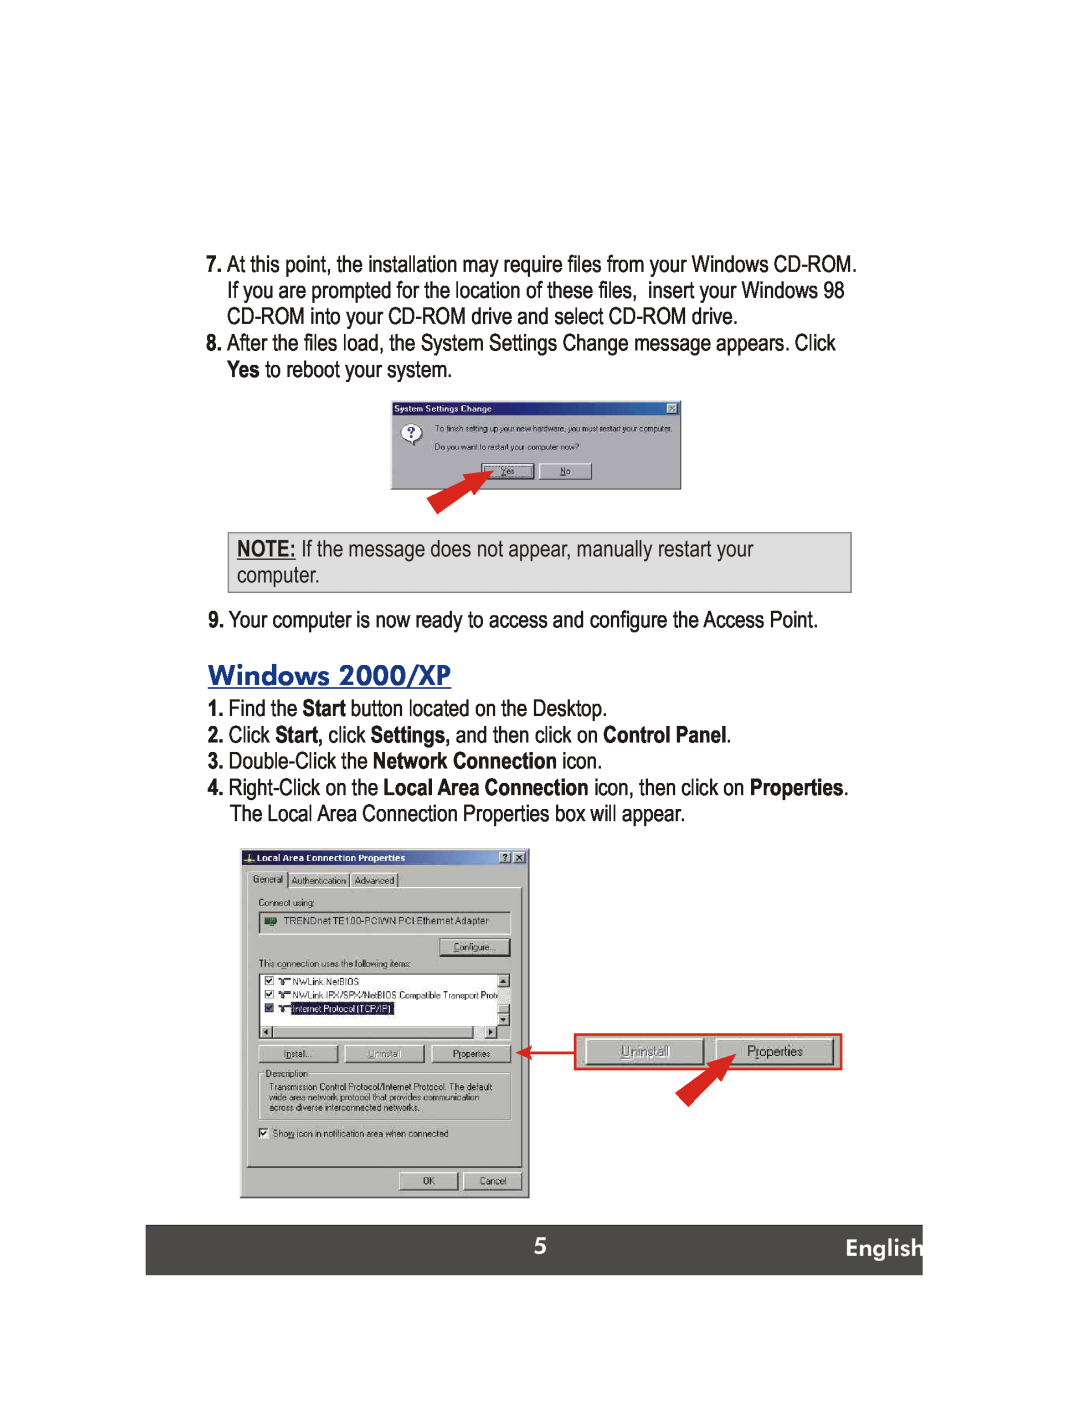 TRENDnet Wireless G LAN Access Point, TEW-430APB manual Windows 2000/XP, English 